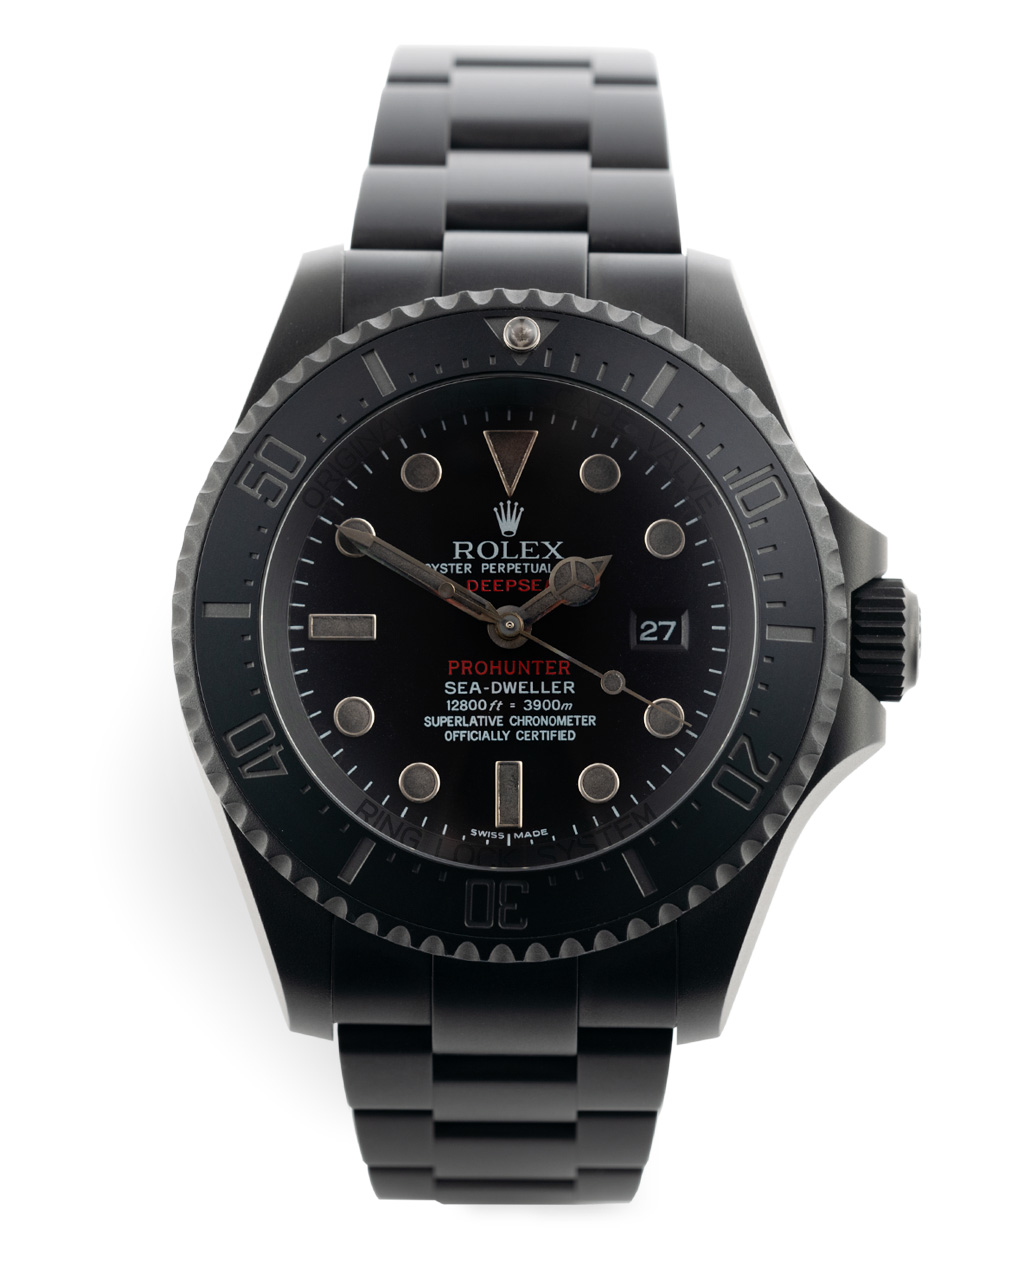 Pro Hunter Sea-Dweller Deepsea Phantom Watches | ref 126660 | One of